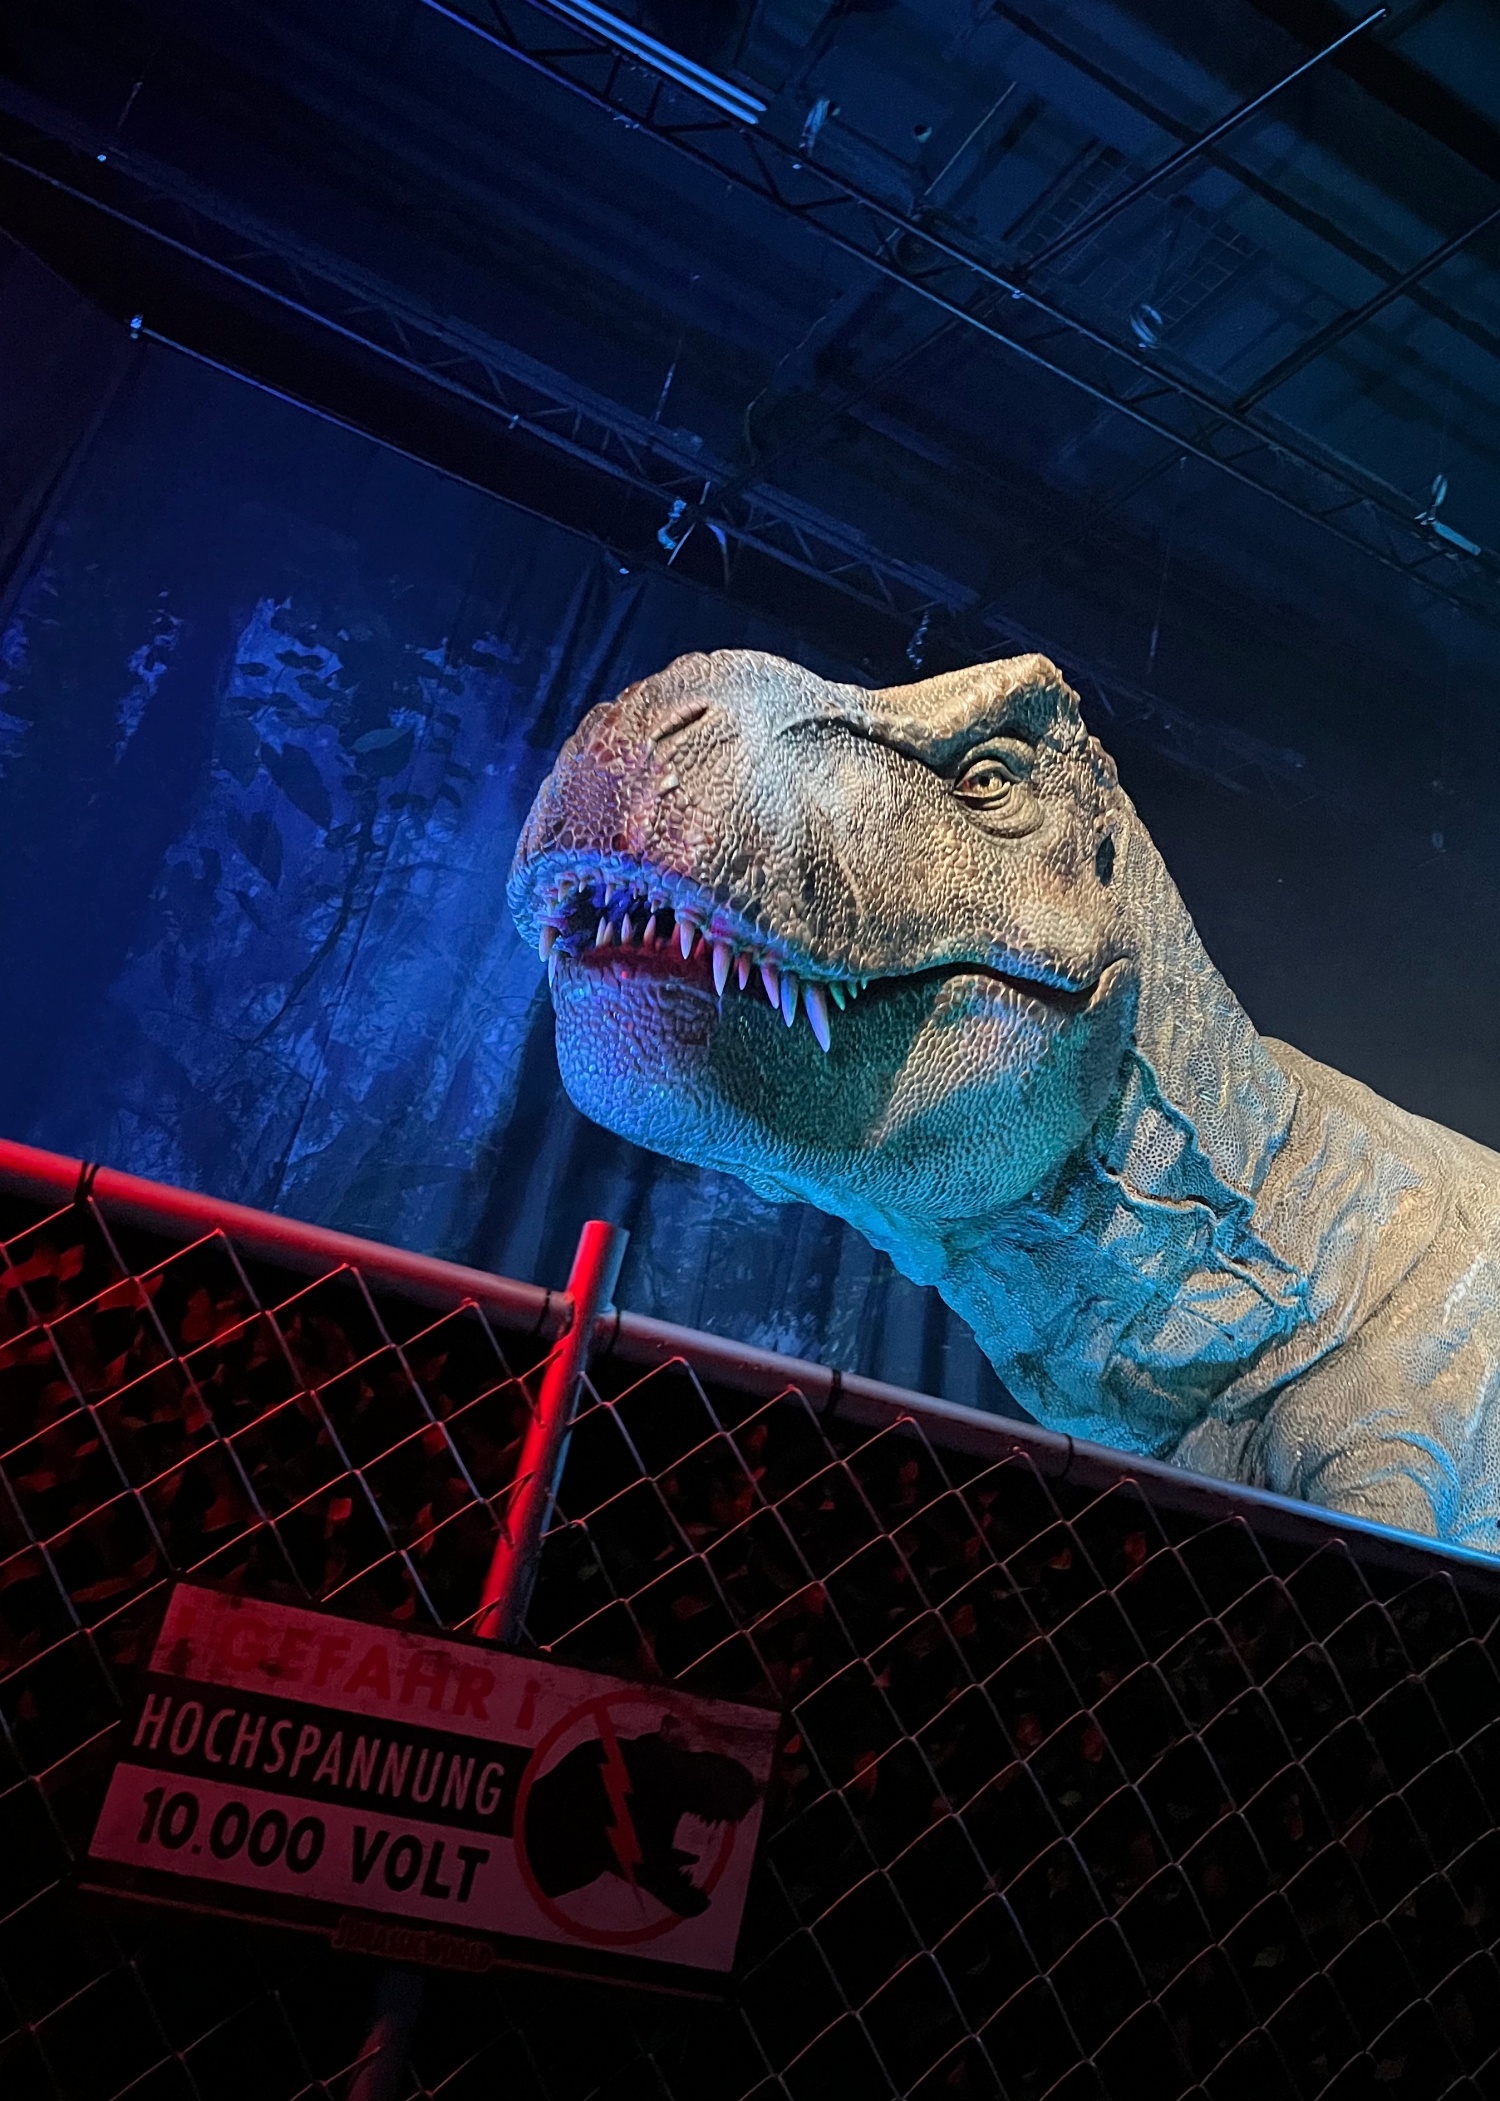 Köln: Jurassic World - The Exhibition